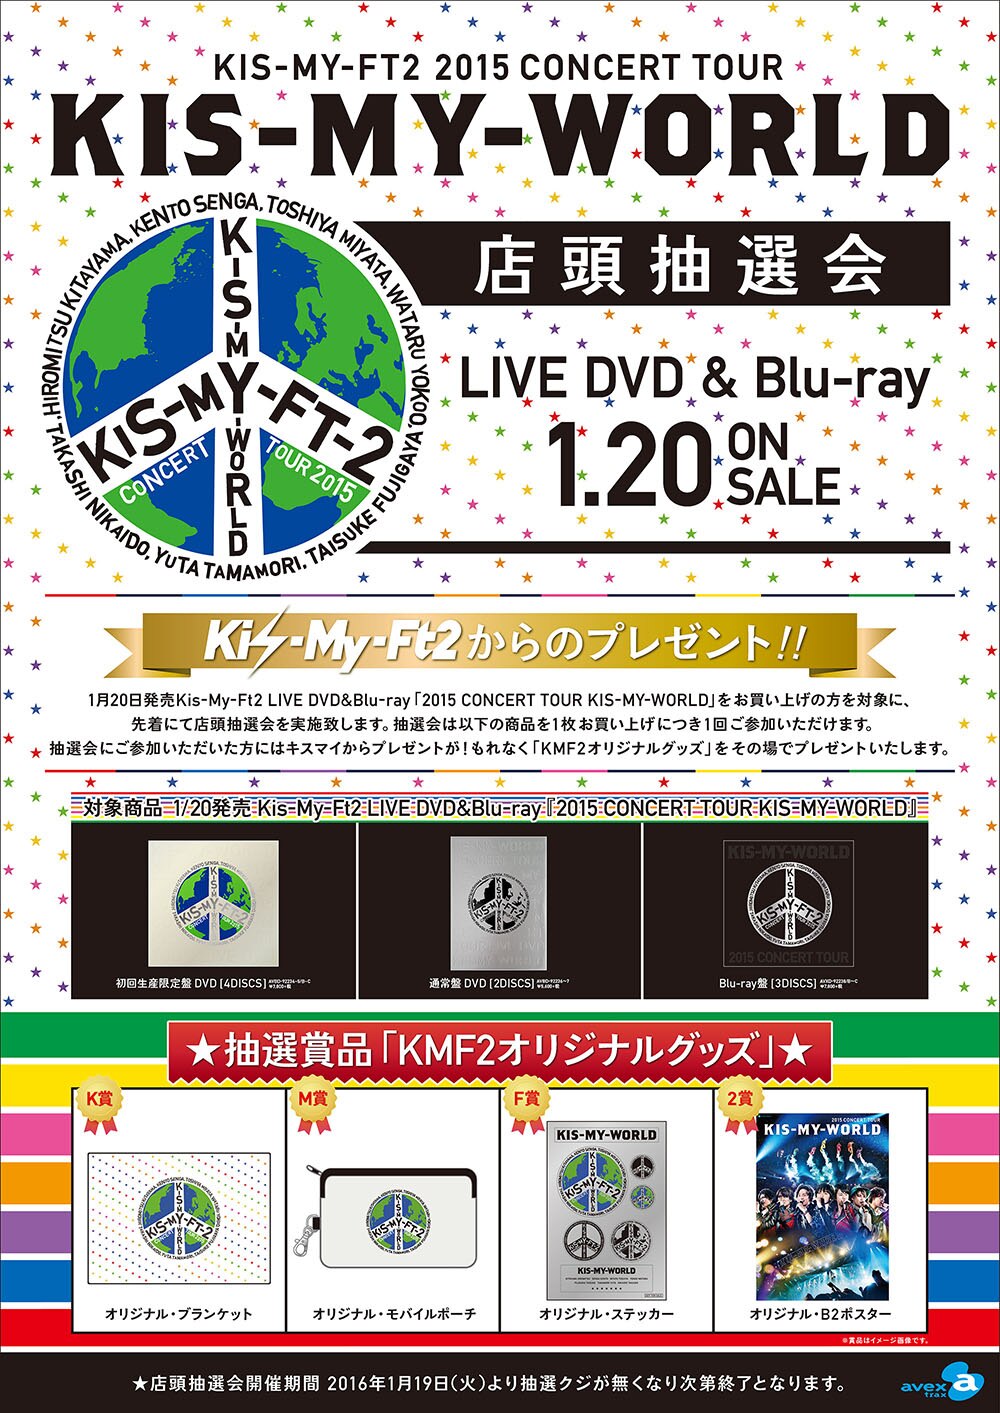 2015　CONCERT　TOUR　KIS-MY-WORLD Blu-ray